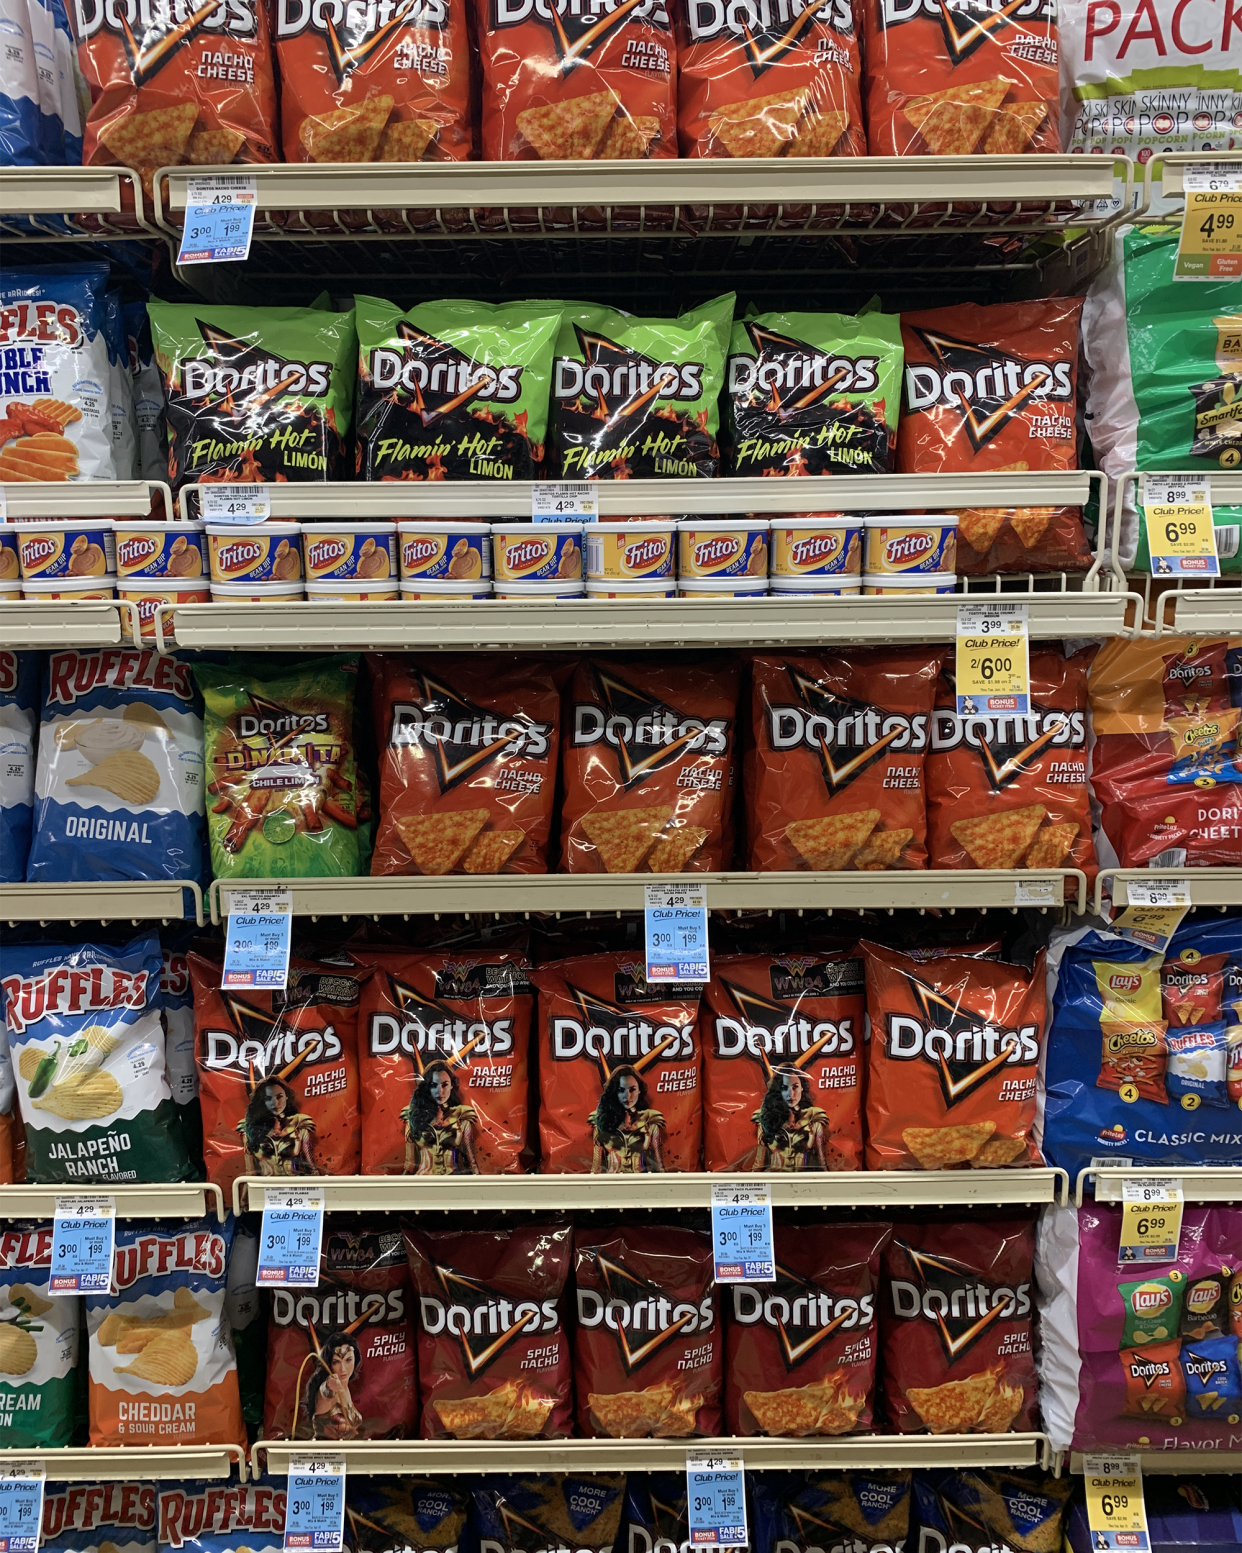 Doritos flavors